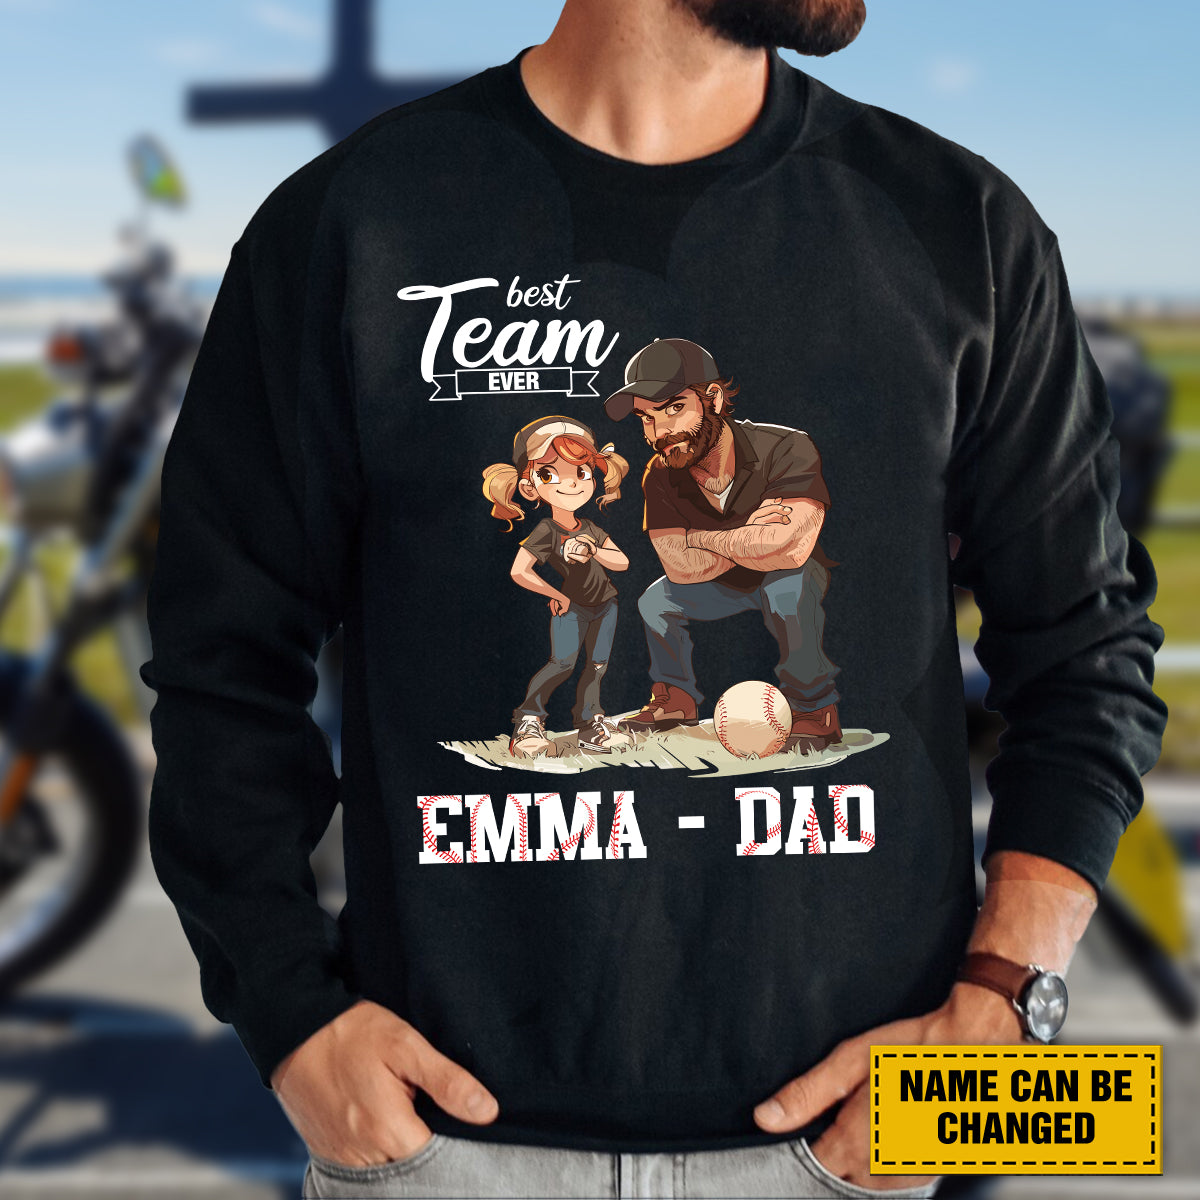 Teesdily | Customized Best Team Ever Shirt, Baseball Dad Shirt, Father Daughter Gift, Dad Tee, Unisex Tshirt Hoodie Sweatshirt Size S-XL / Mug 11-15oz